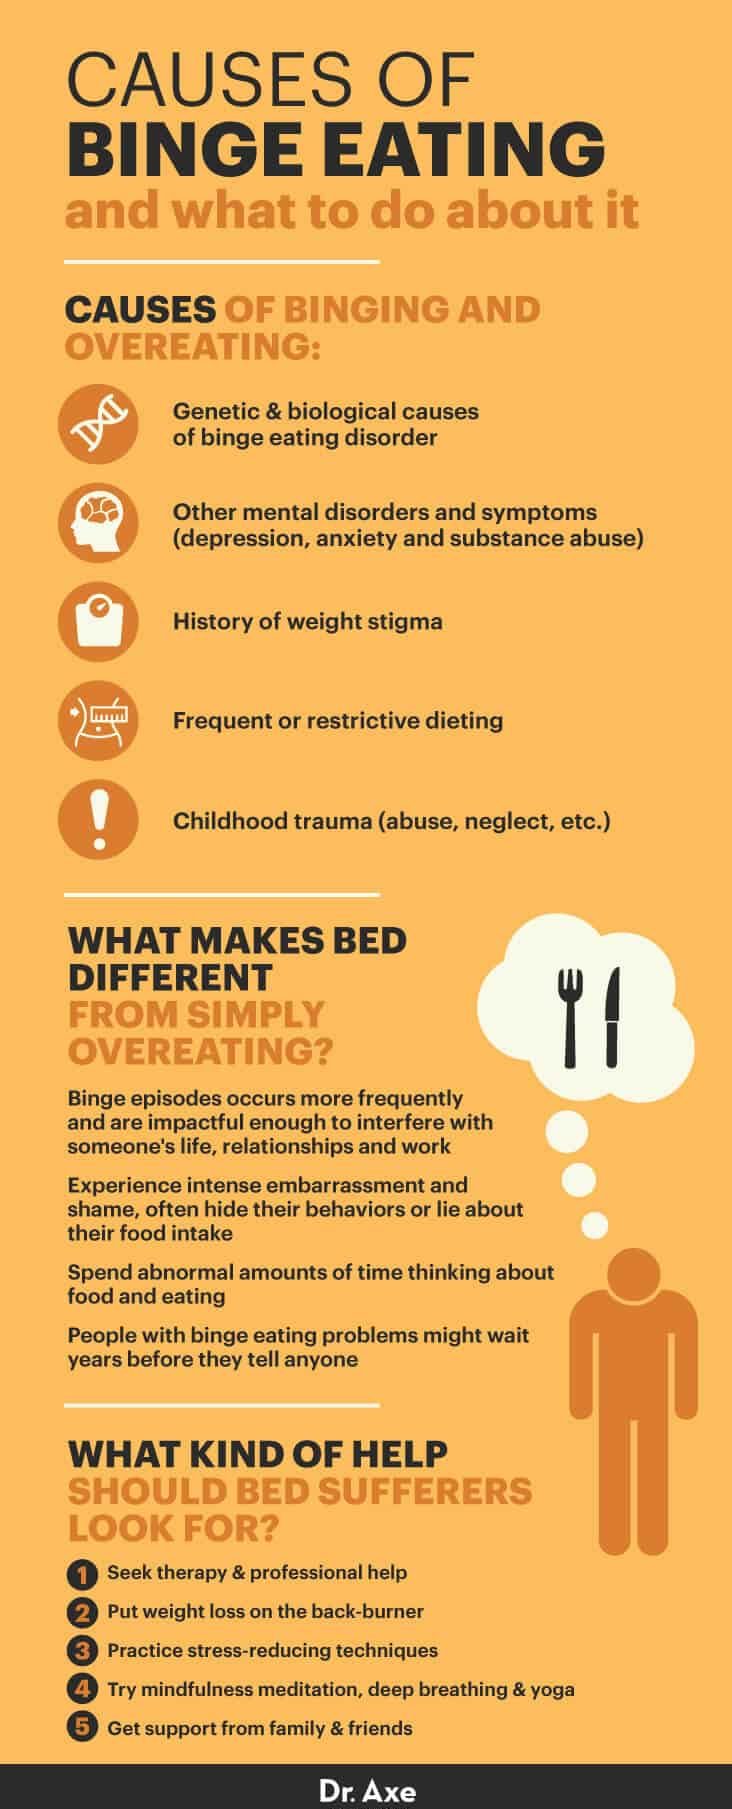 Causes of binge eating disorder - Dr. Axe